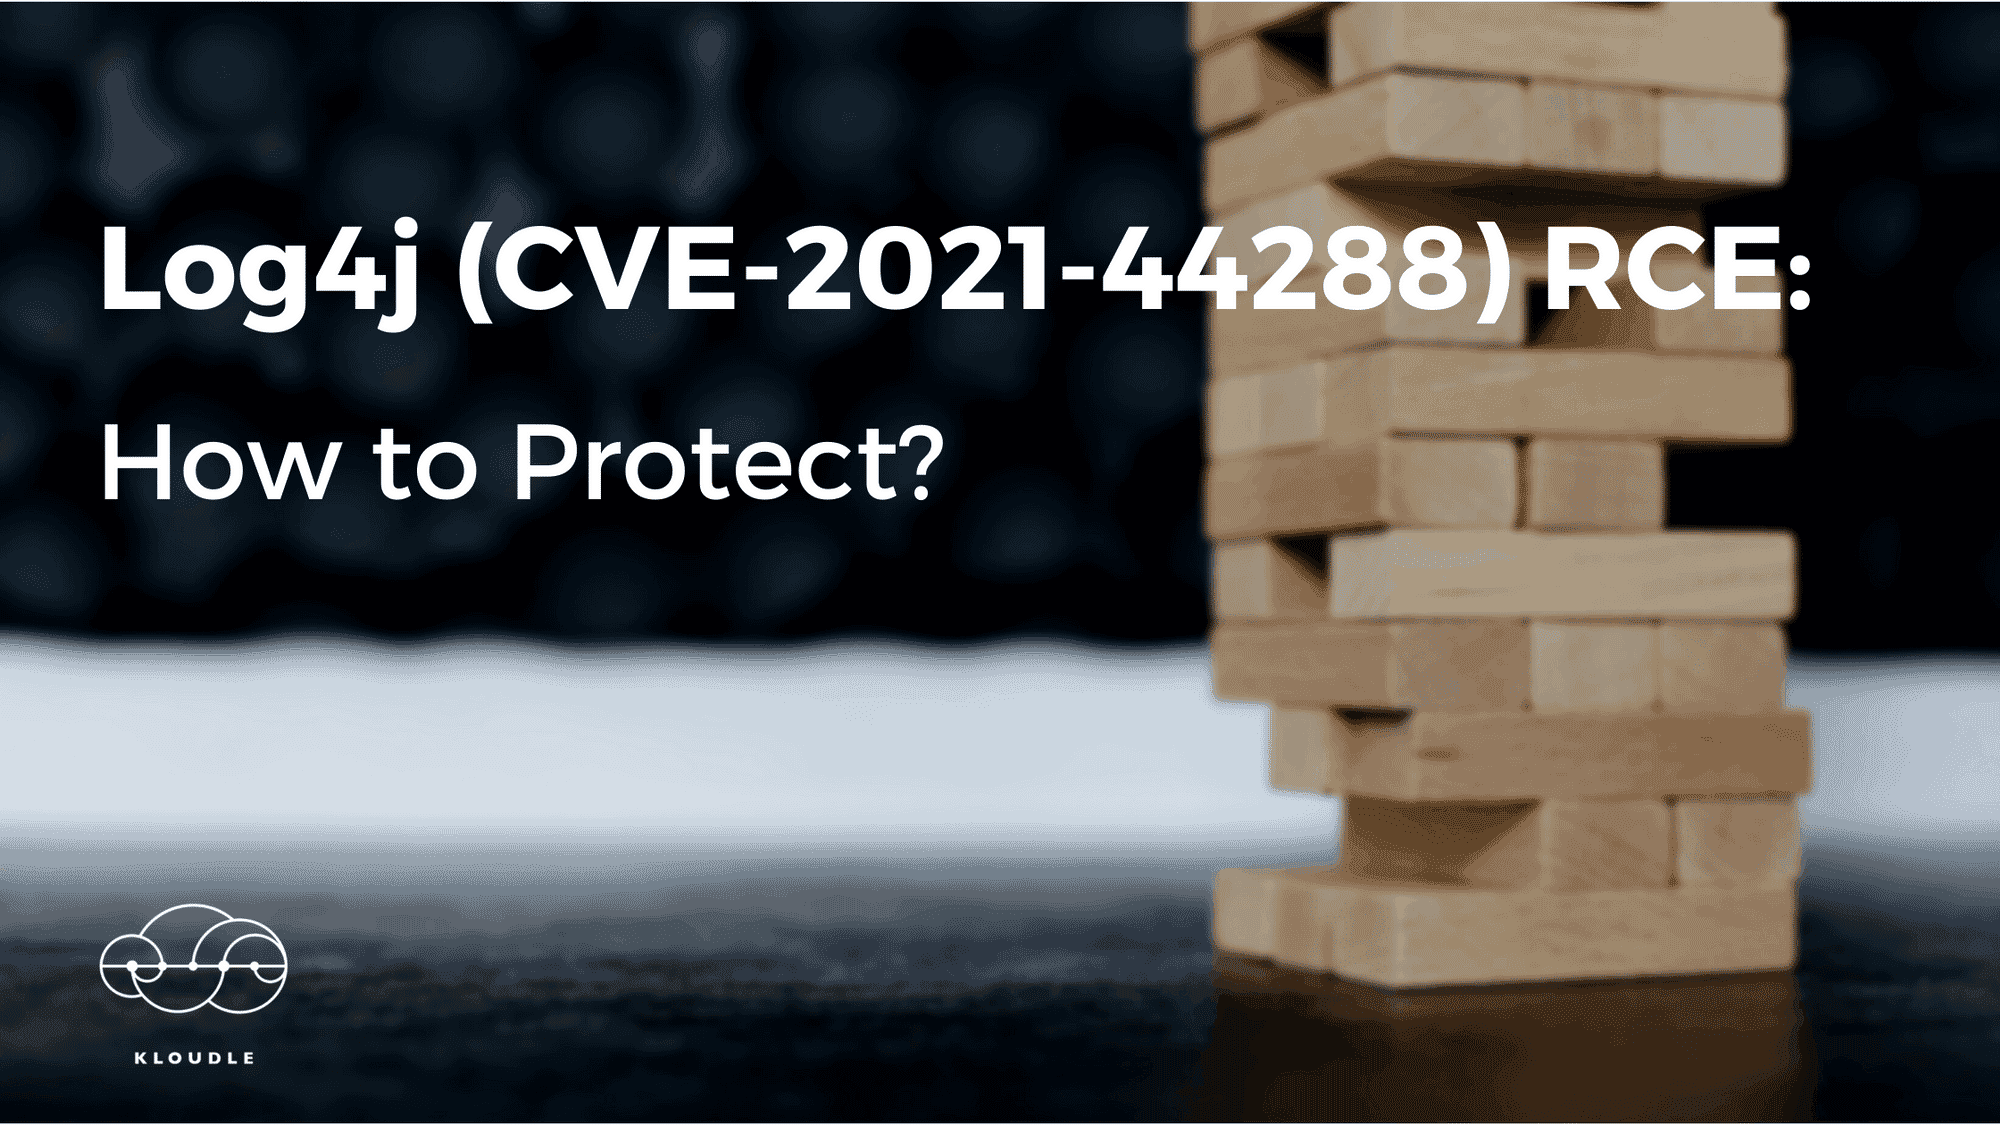 Log4j (CVE-2021-44228) RCE How to Protect